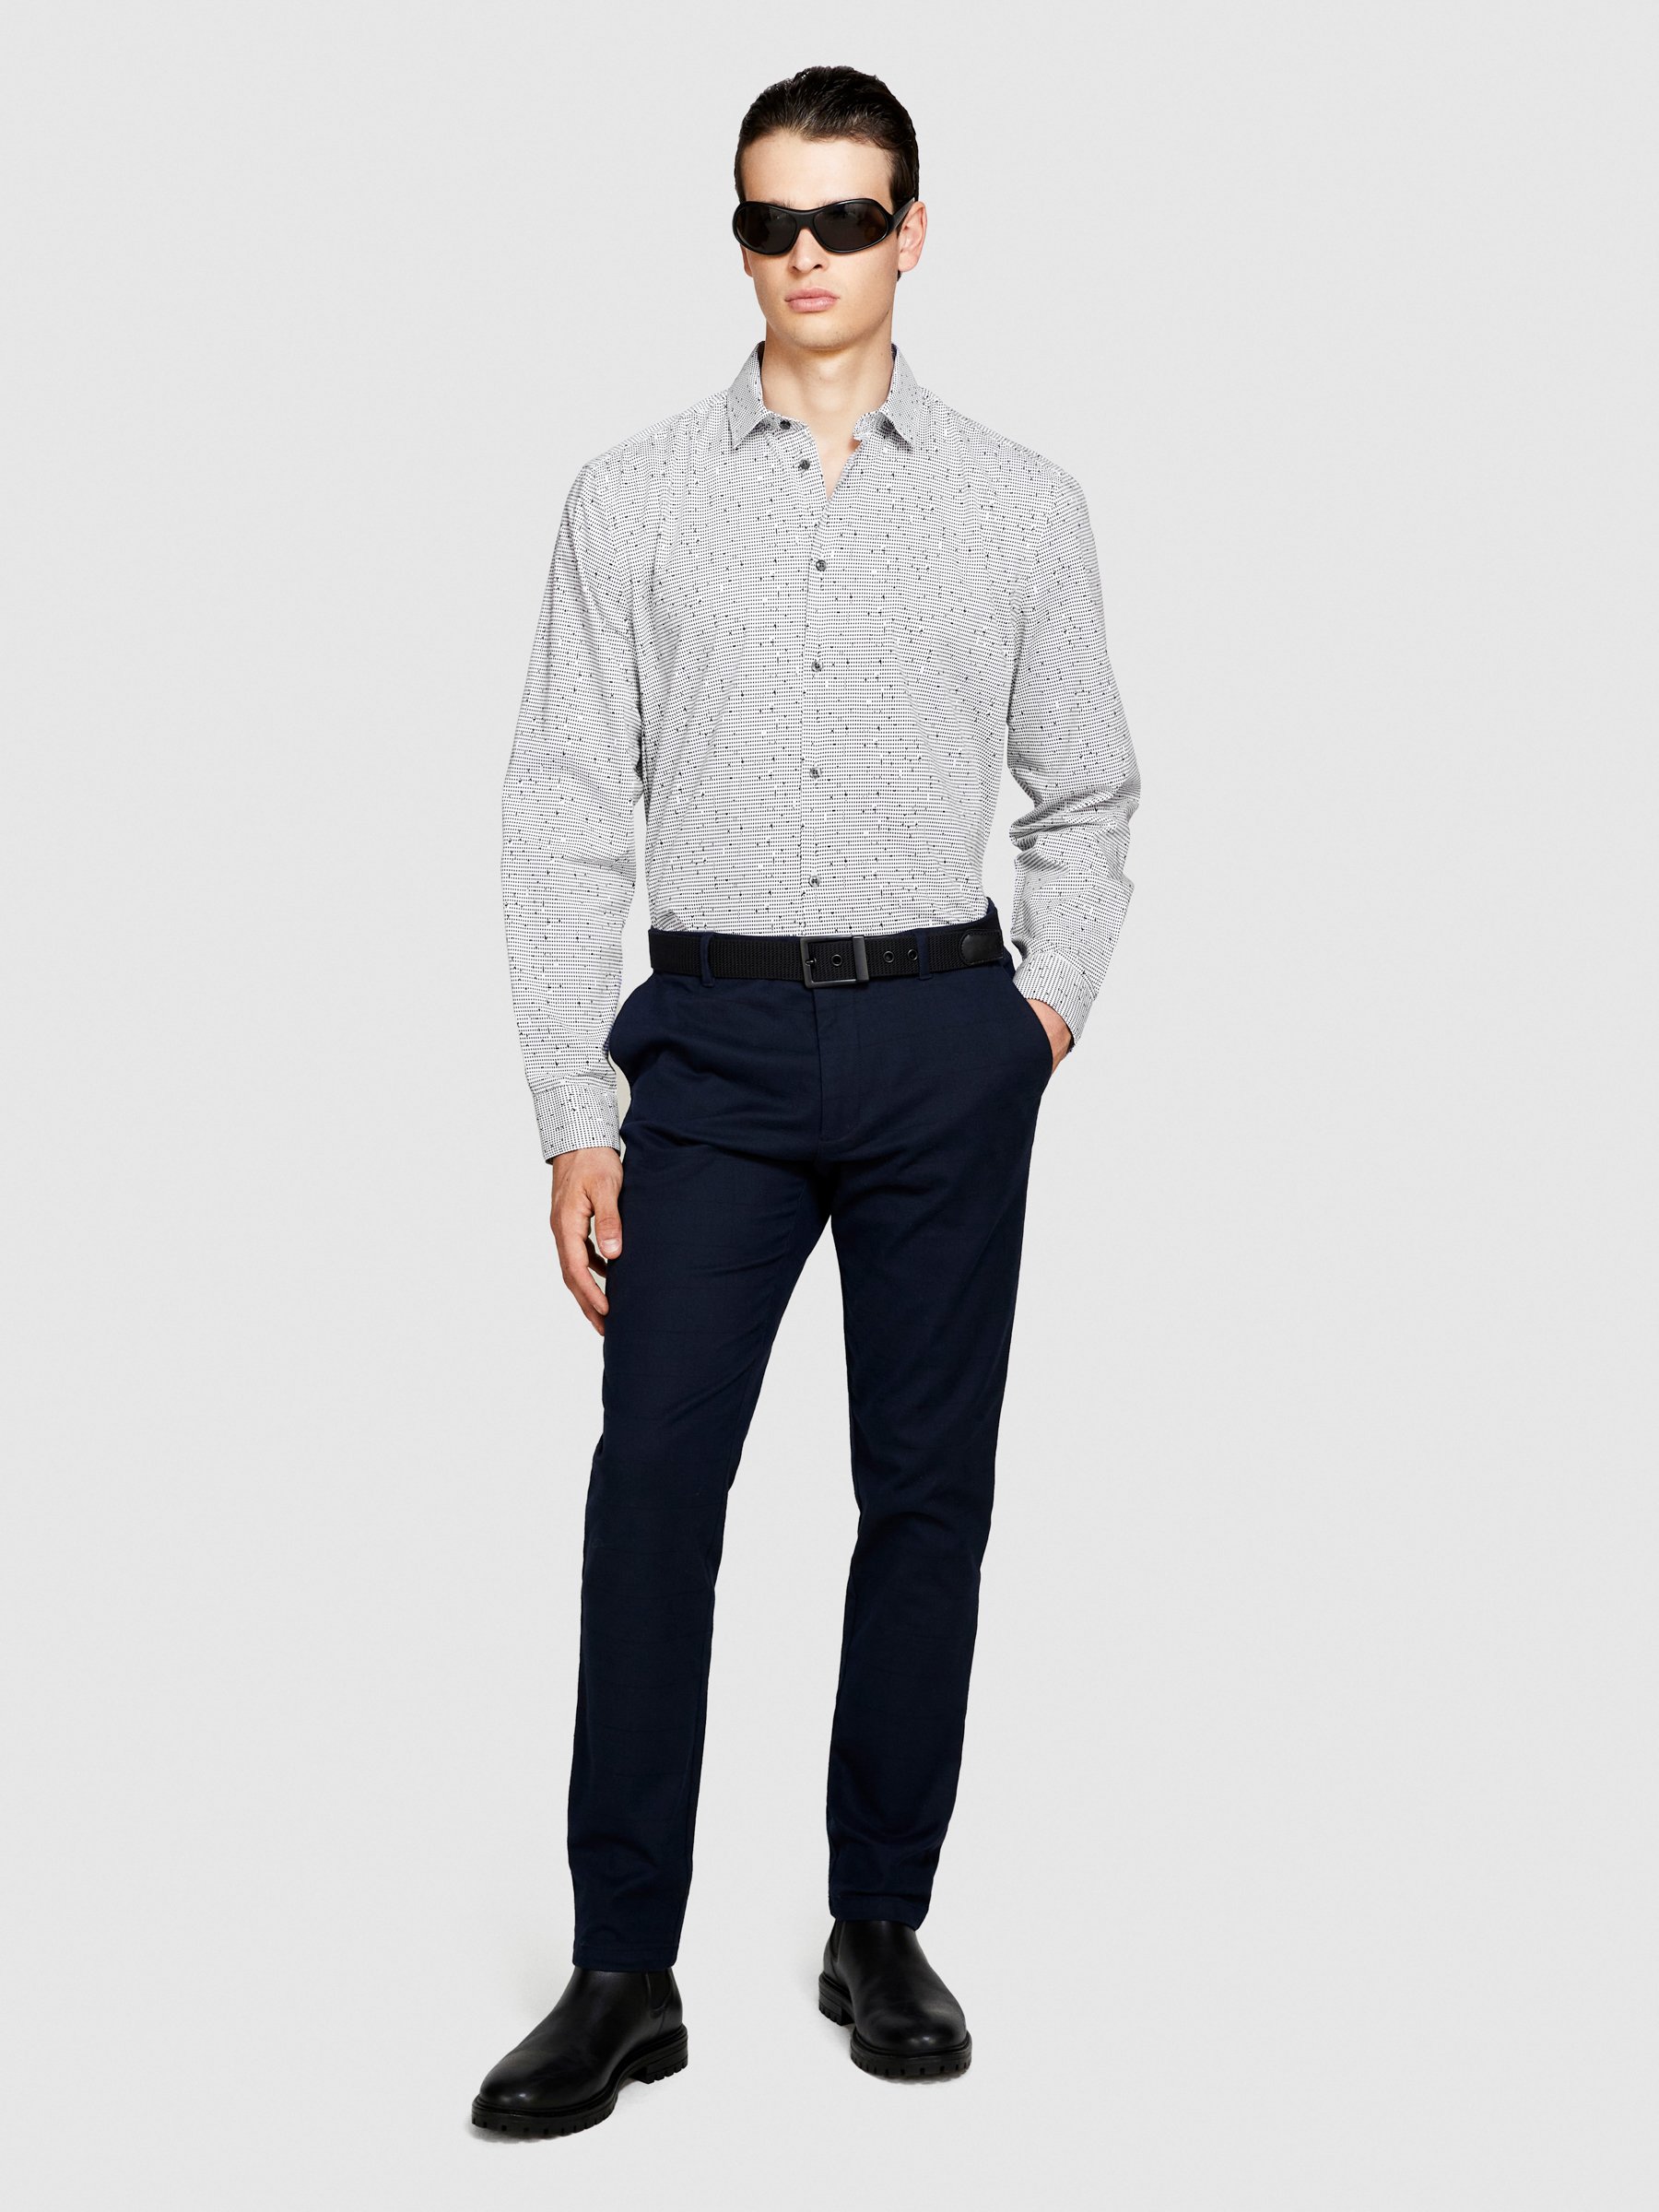 Sisley - Printed Shirt, Man, Gray, Size: M